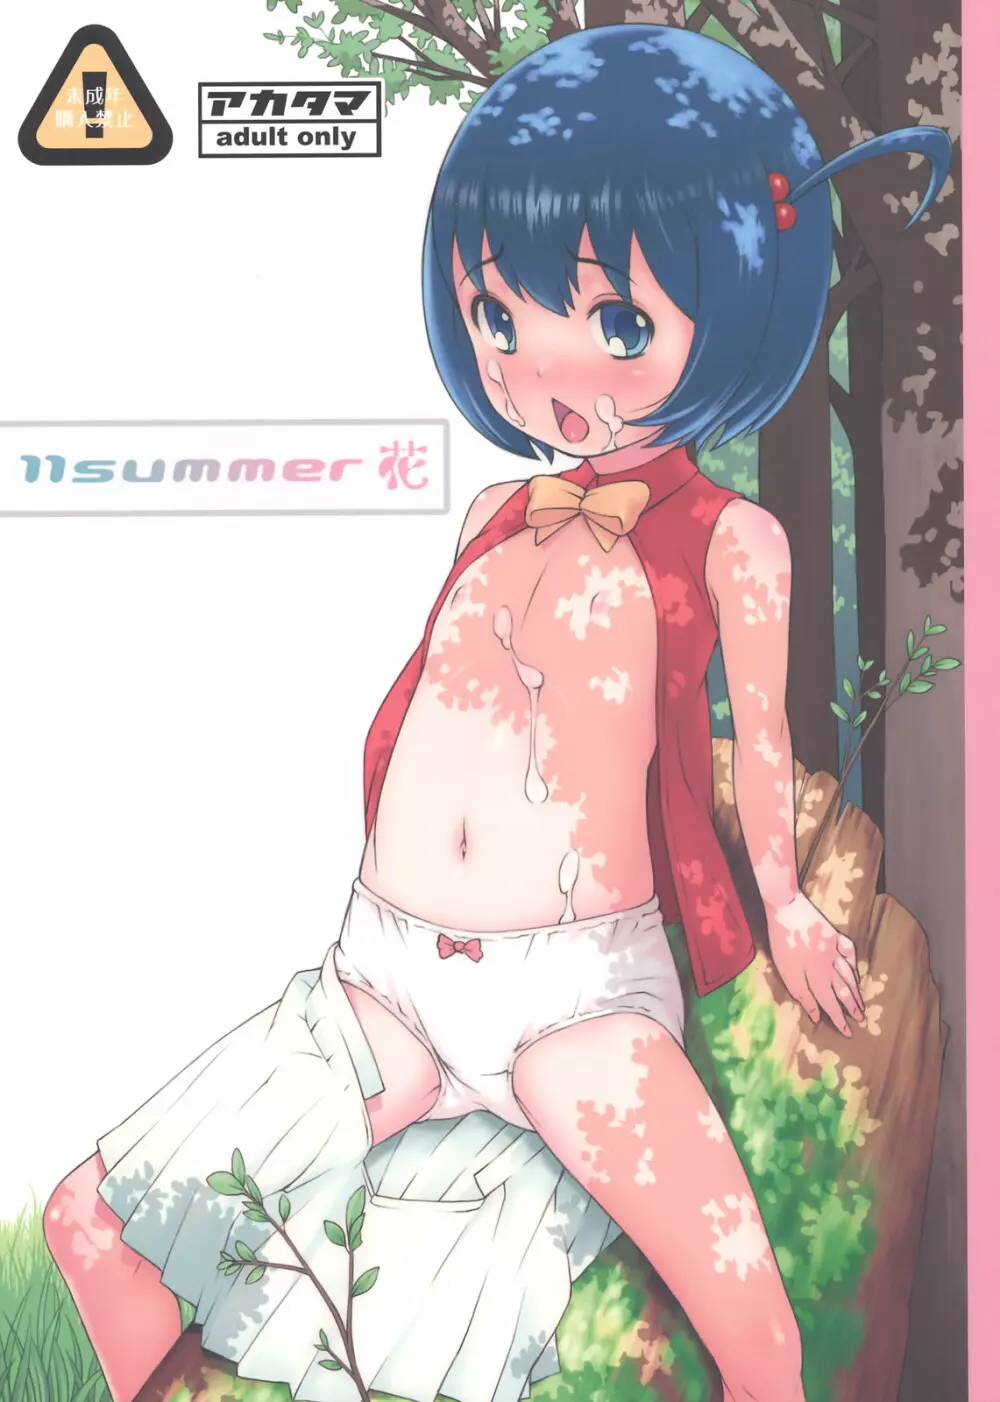 11summer 花 - page1